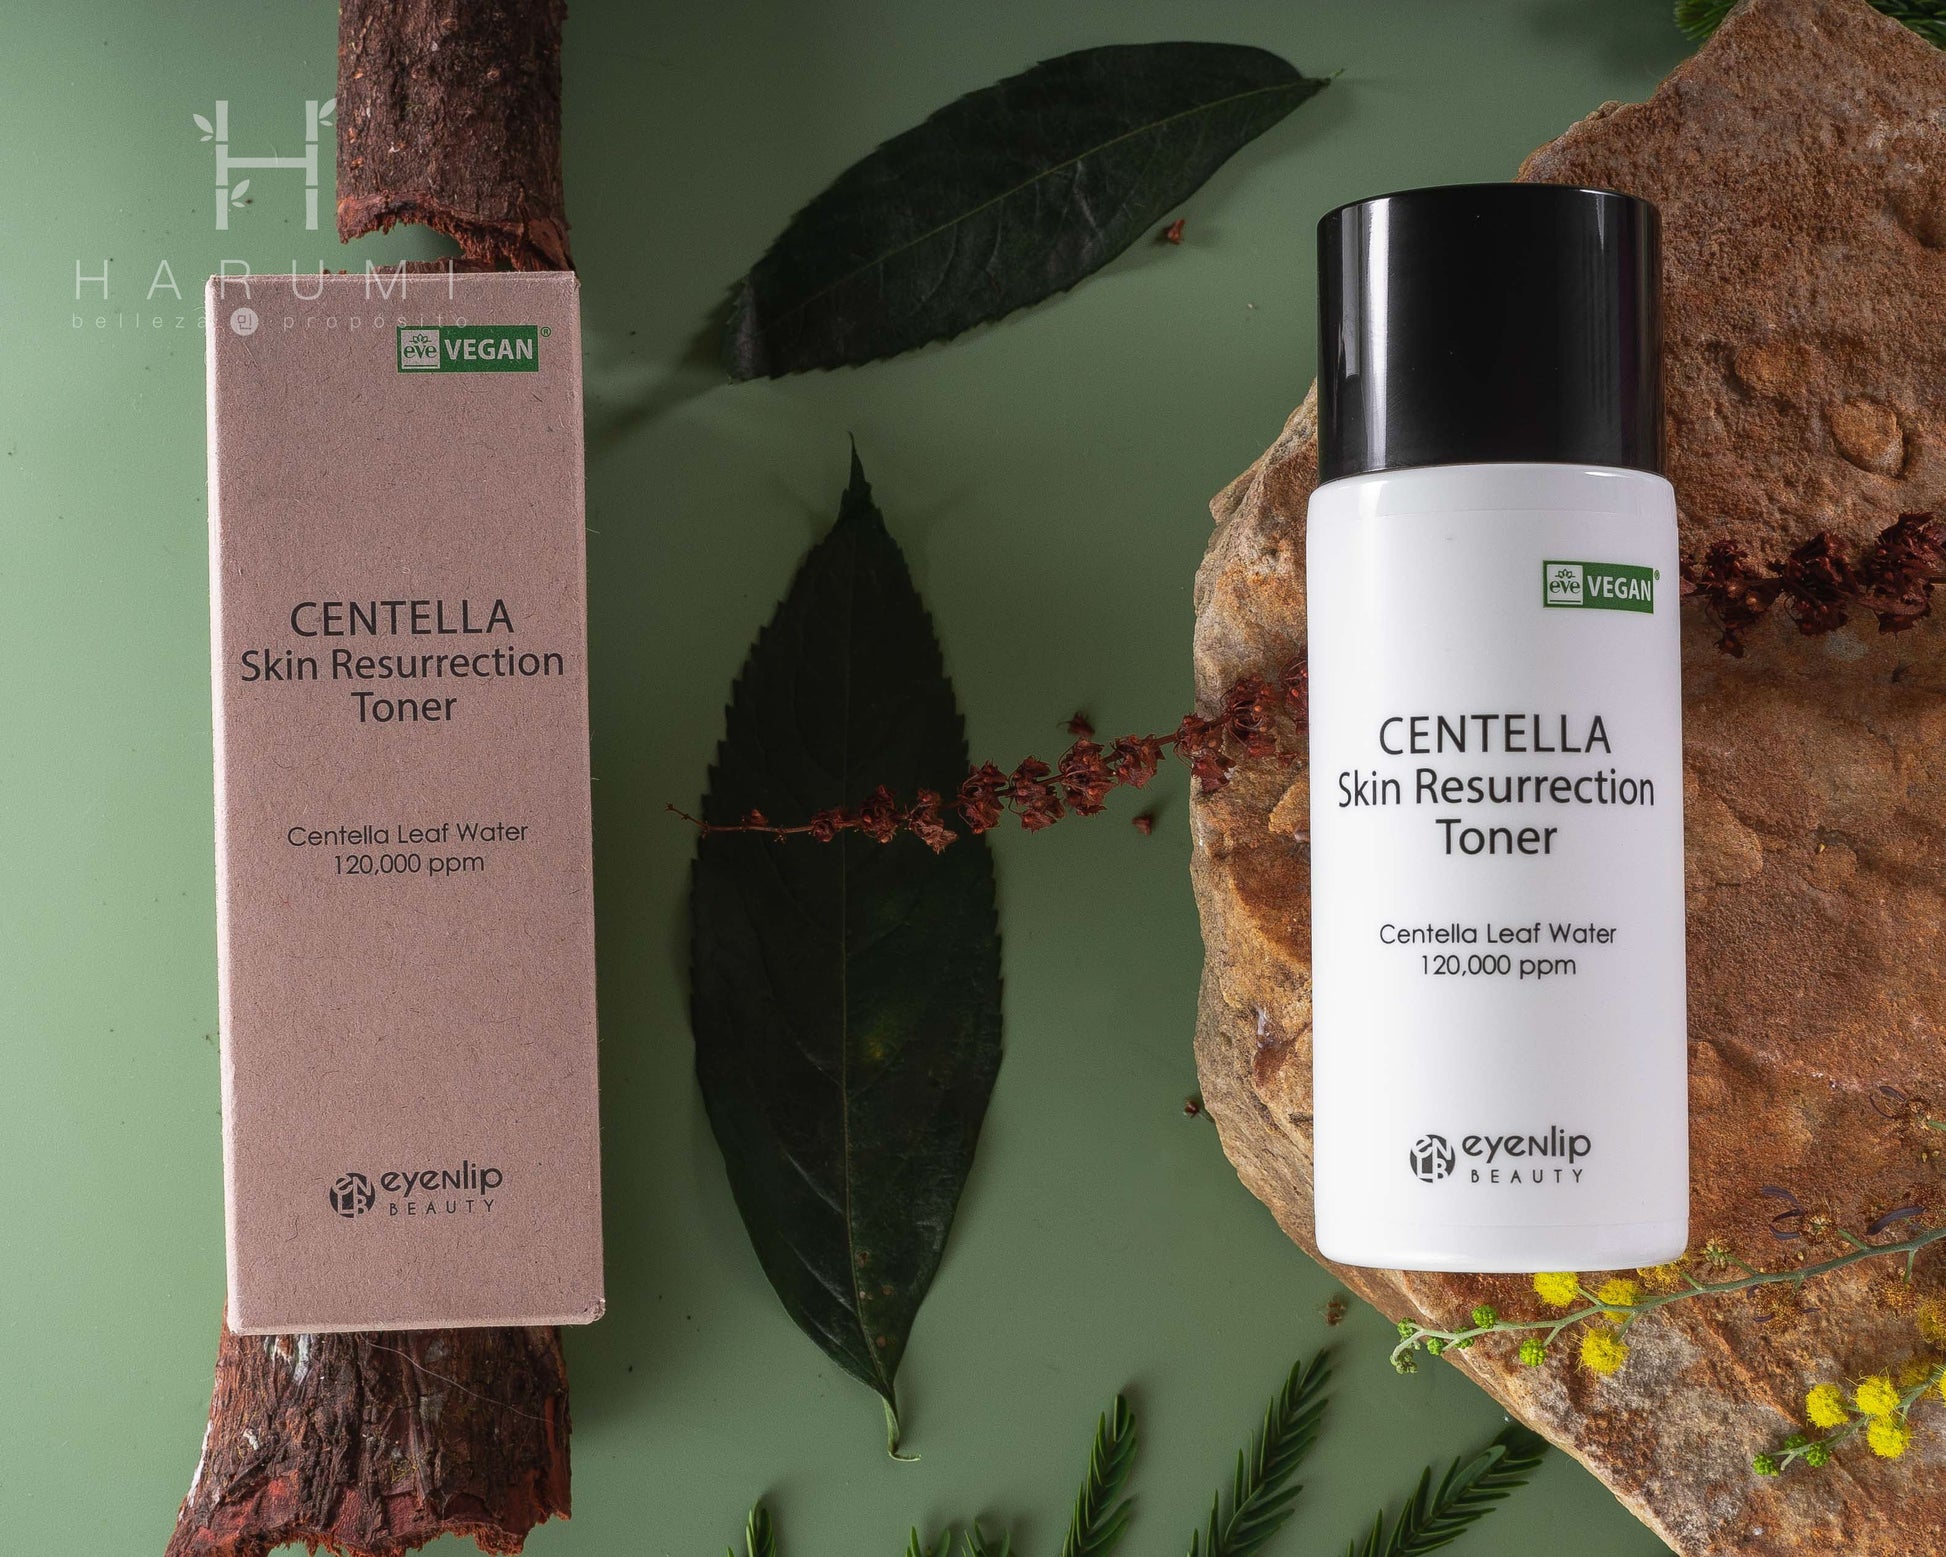 Eyenlip Centella Skin Resurrection Toner Skincare maquillaje productos de belleza coreanos en Colombia kbeauty